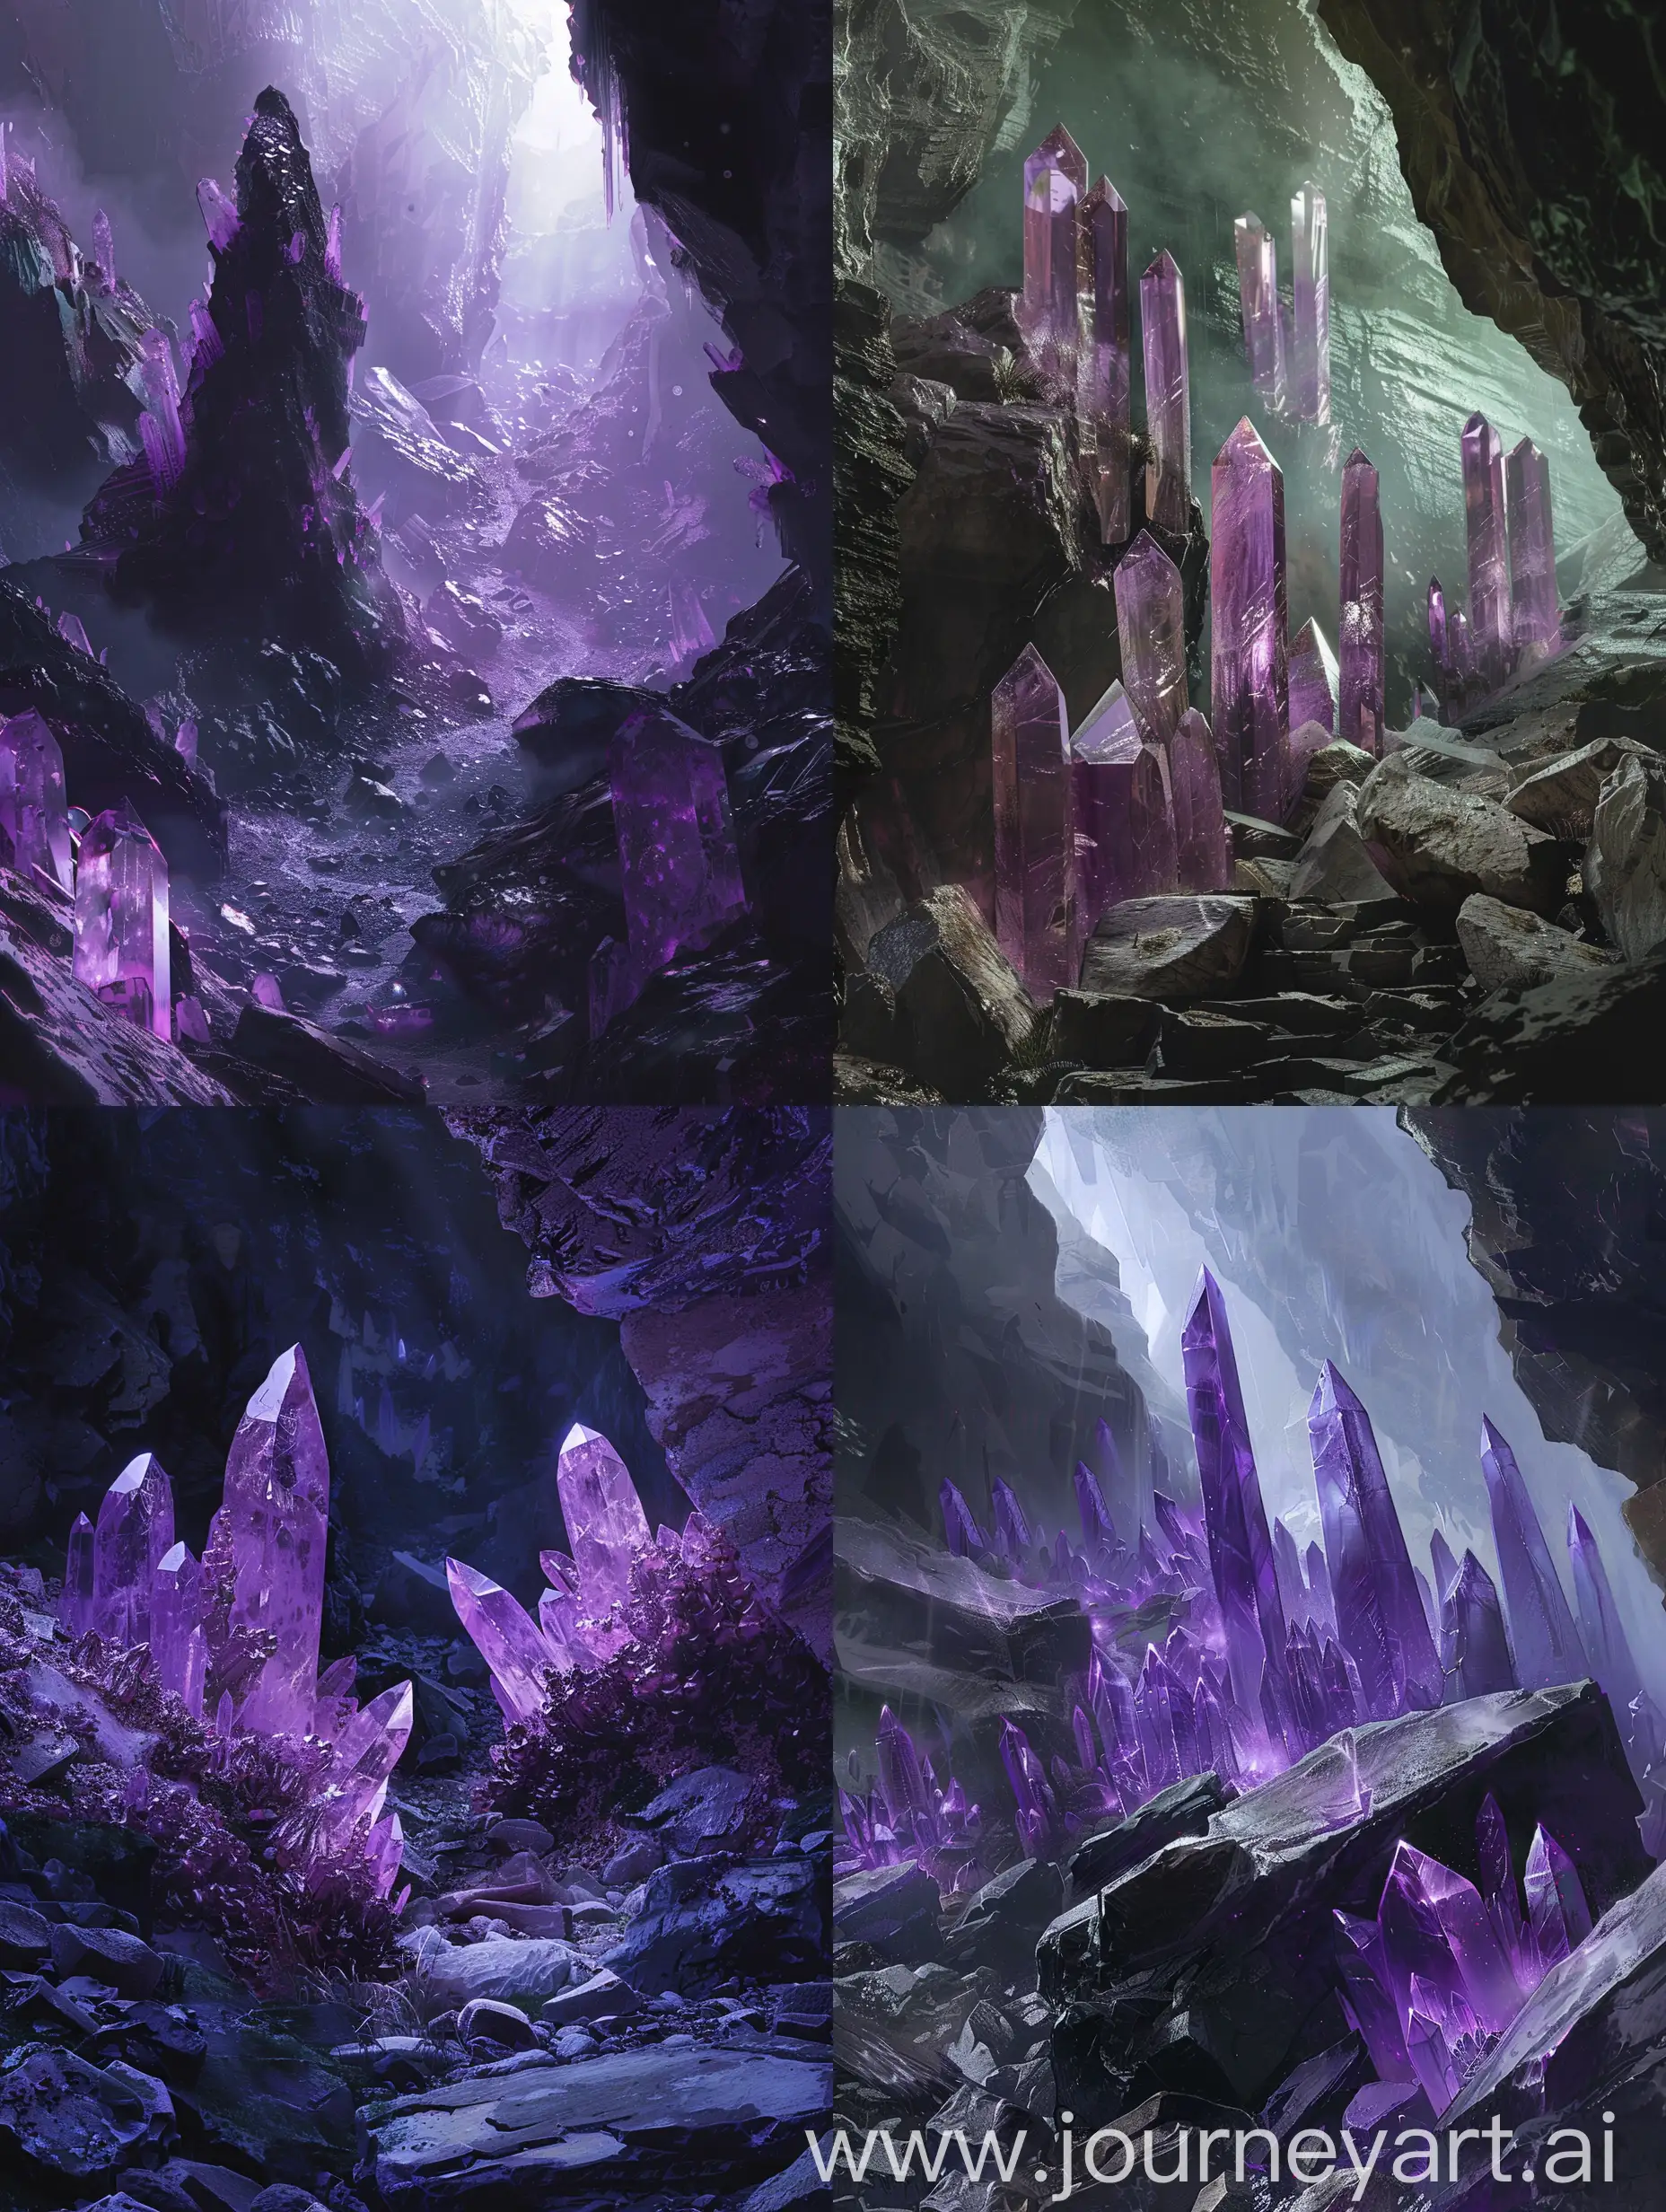 Gloomy-Rocks-with-Purple-Crystals-Growing